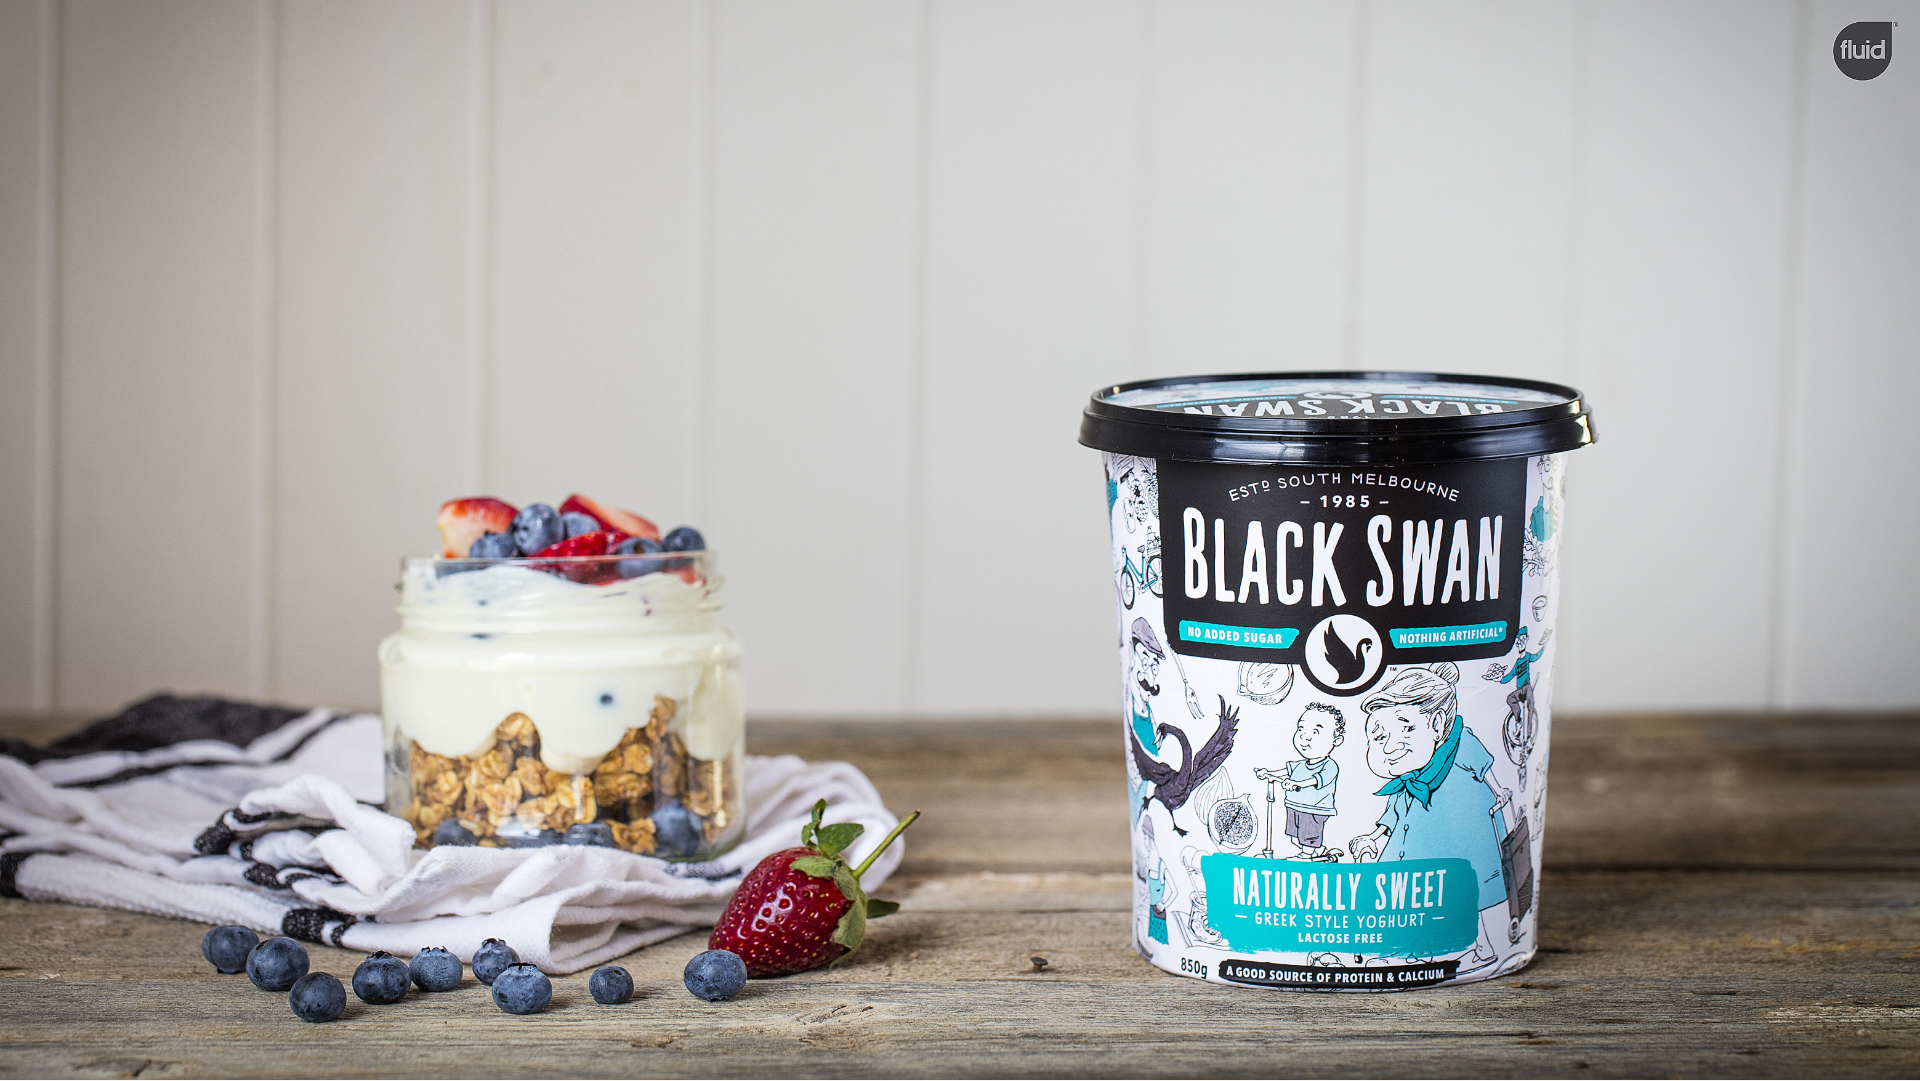 Black Swan Lactose Free Naturally Sweet Greek Style Yoghurt packaging, placed next to granola, yoghurt and berries.